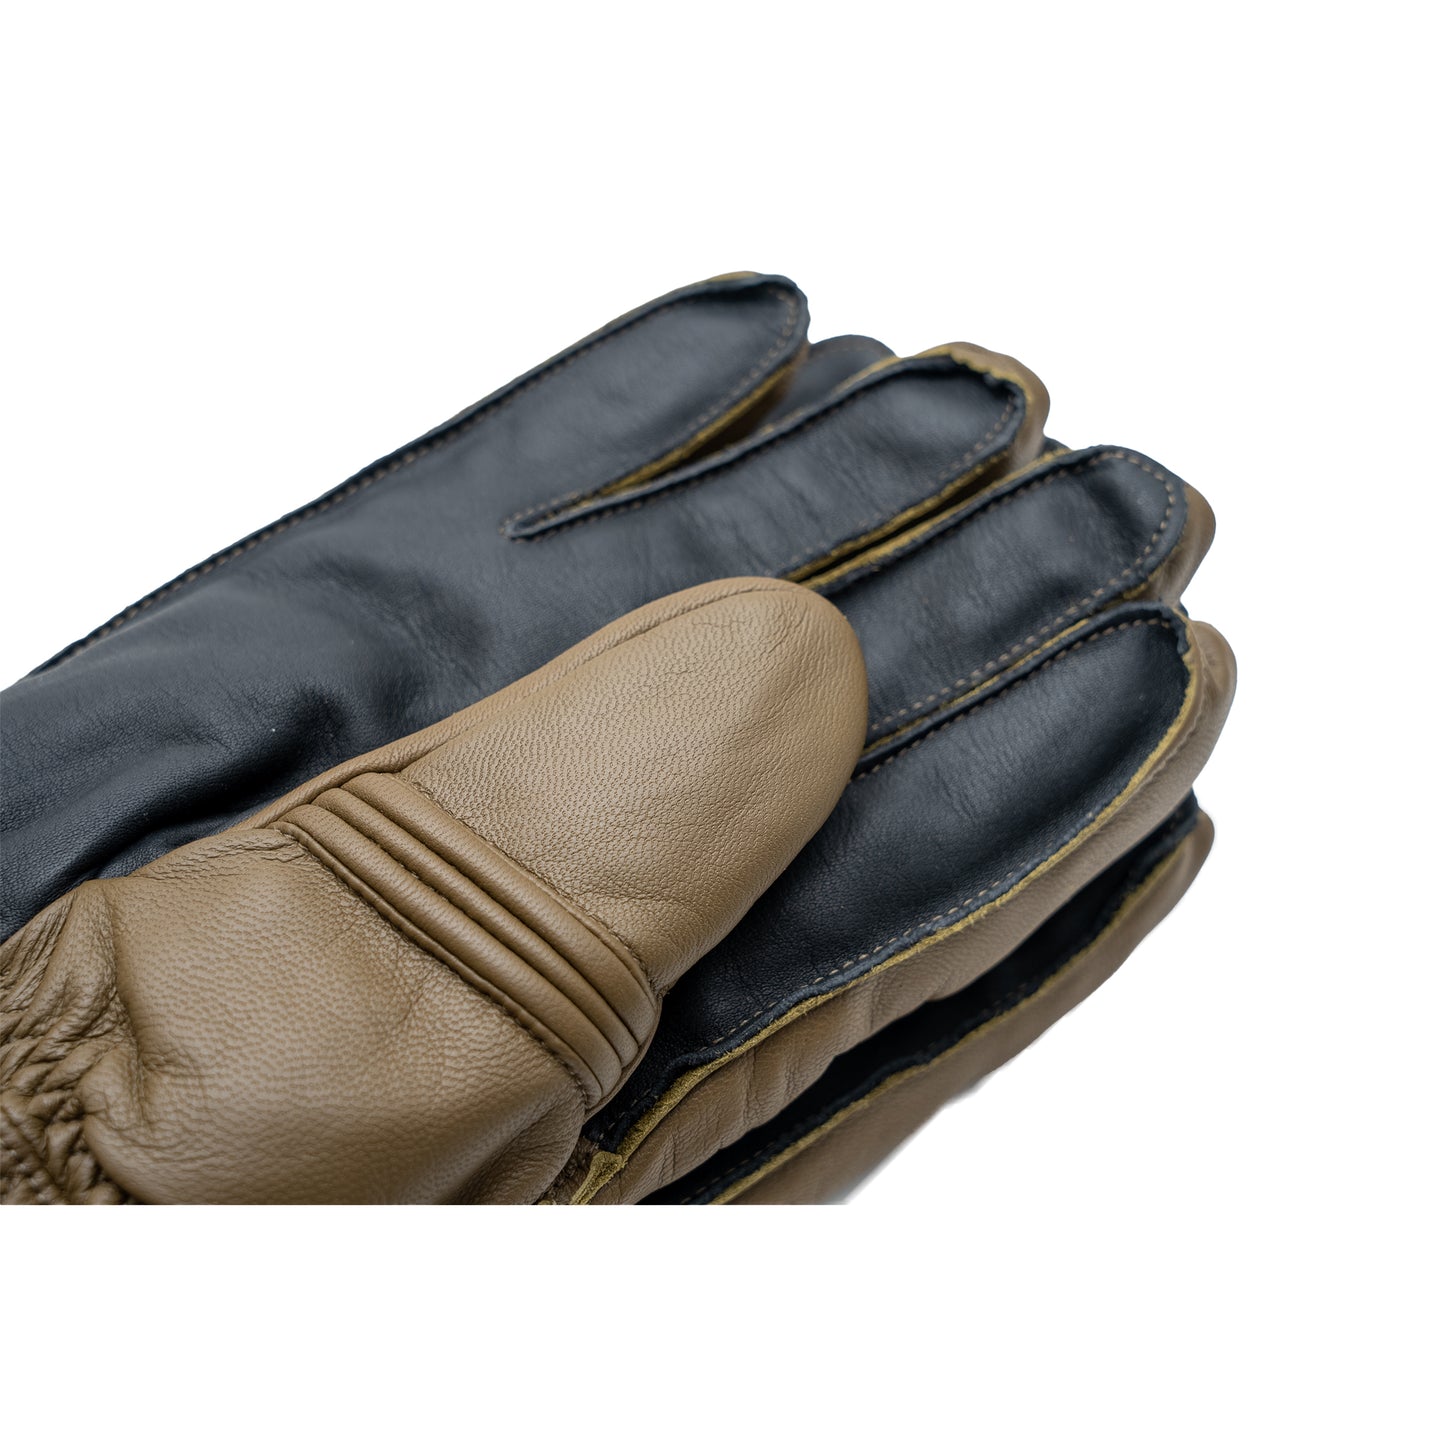 SX-200 Classic Leather Glove